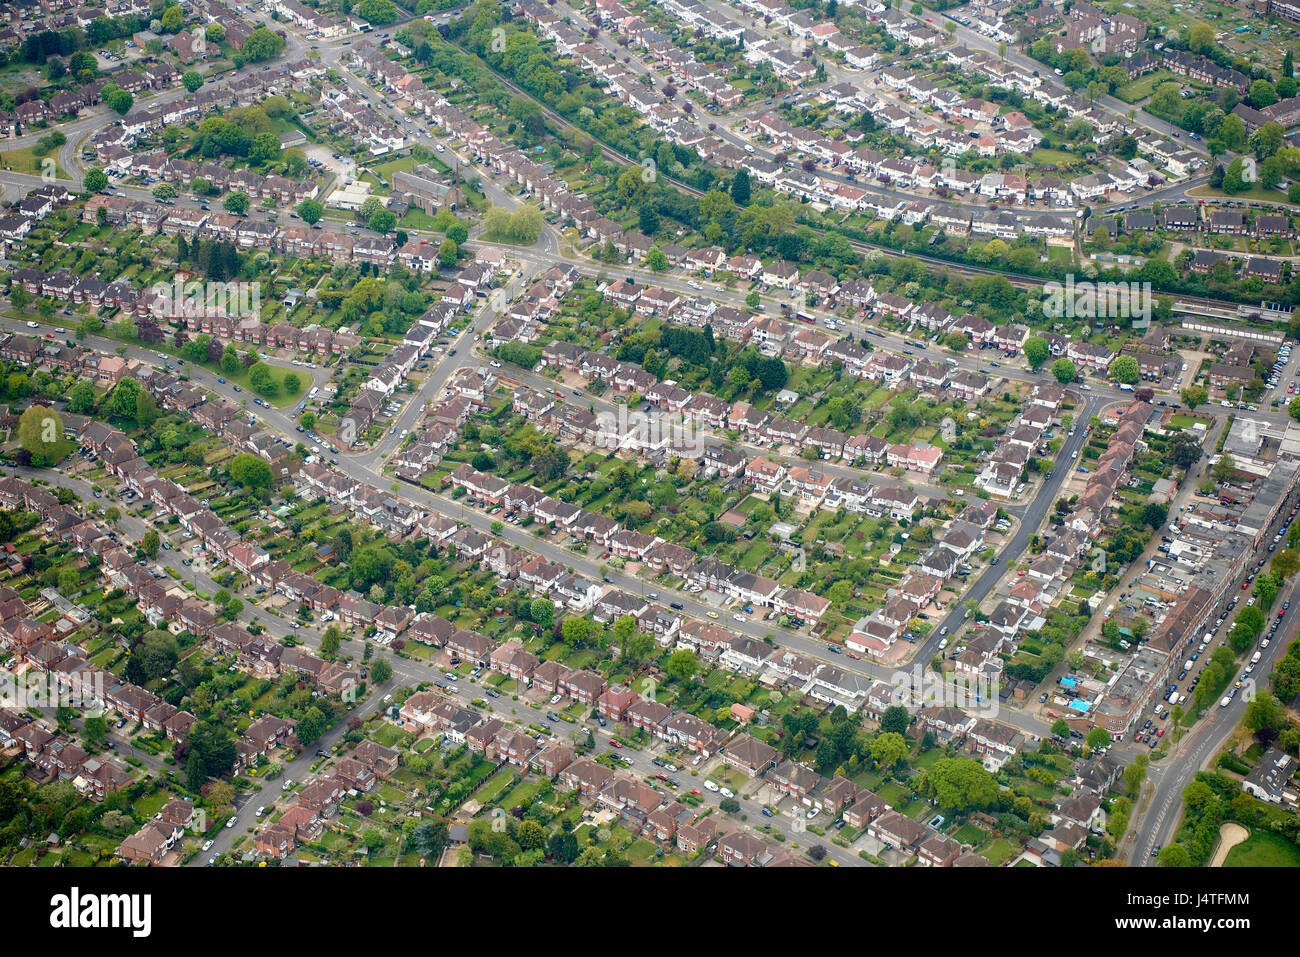 Eine Luftaufnahme von Norden Londons Suburbia, Barnet, Nord-London, UK Stockfoto